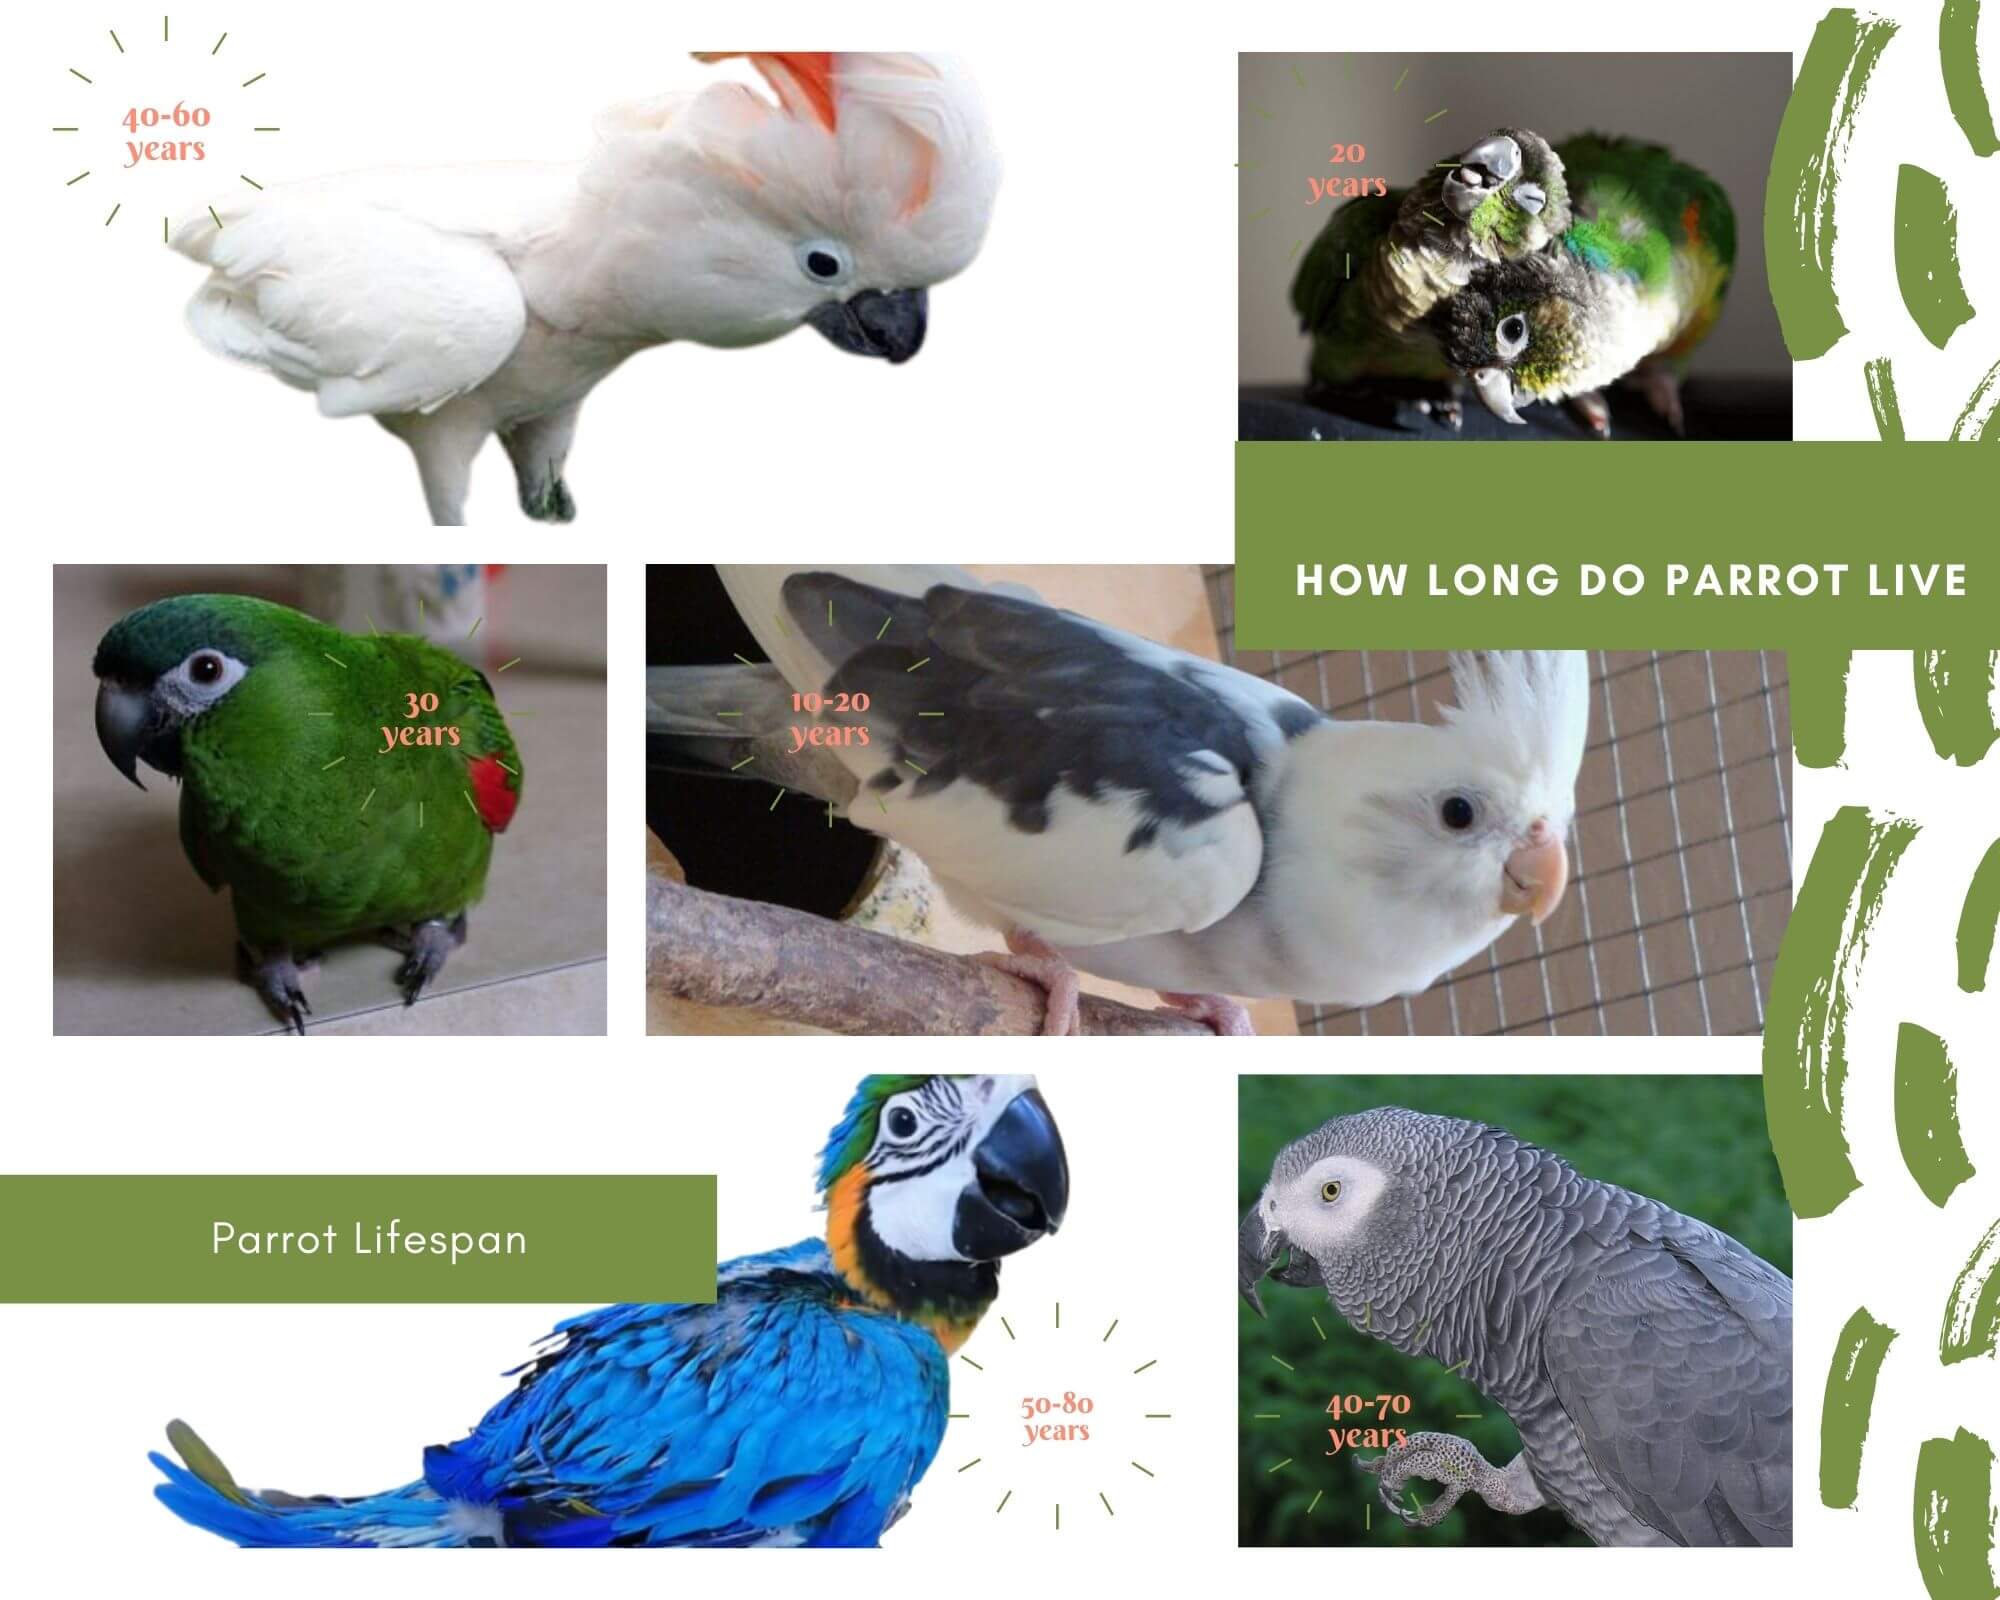 Parrot Lifespan